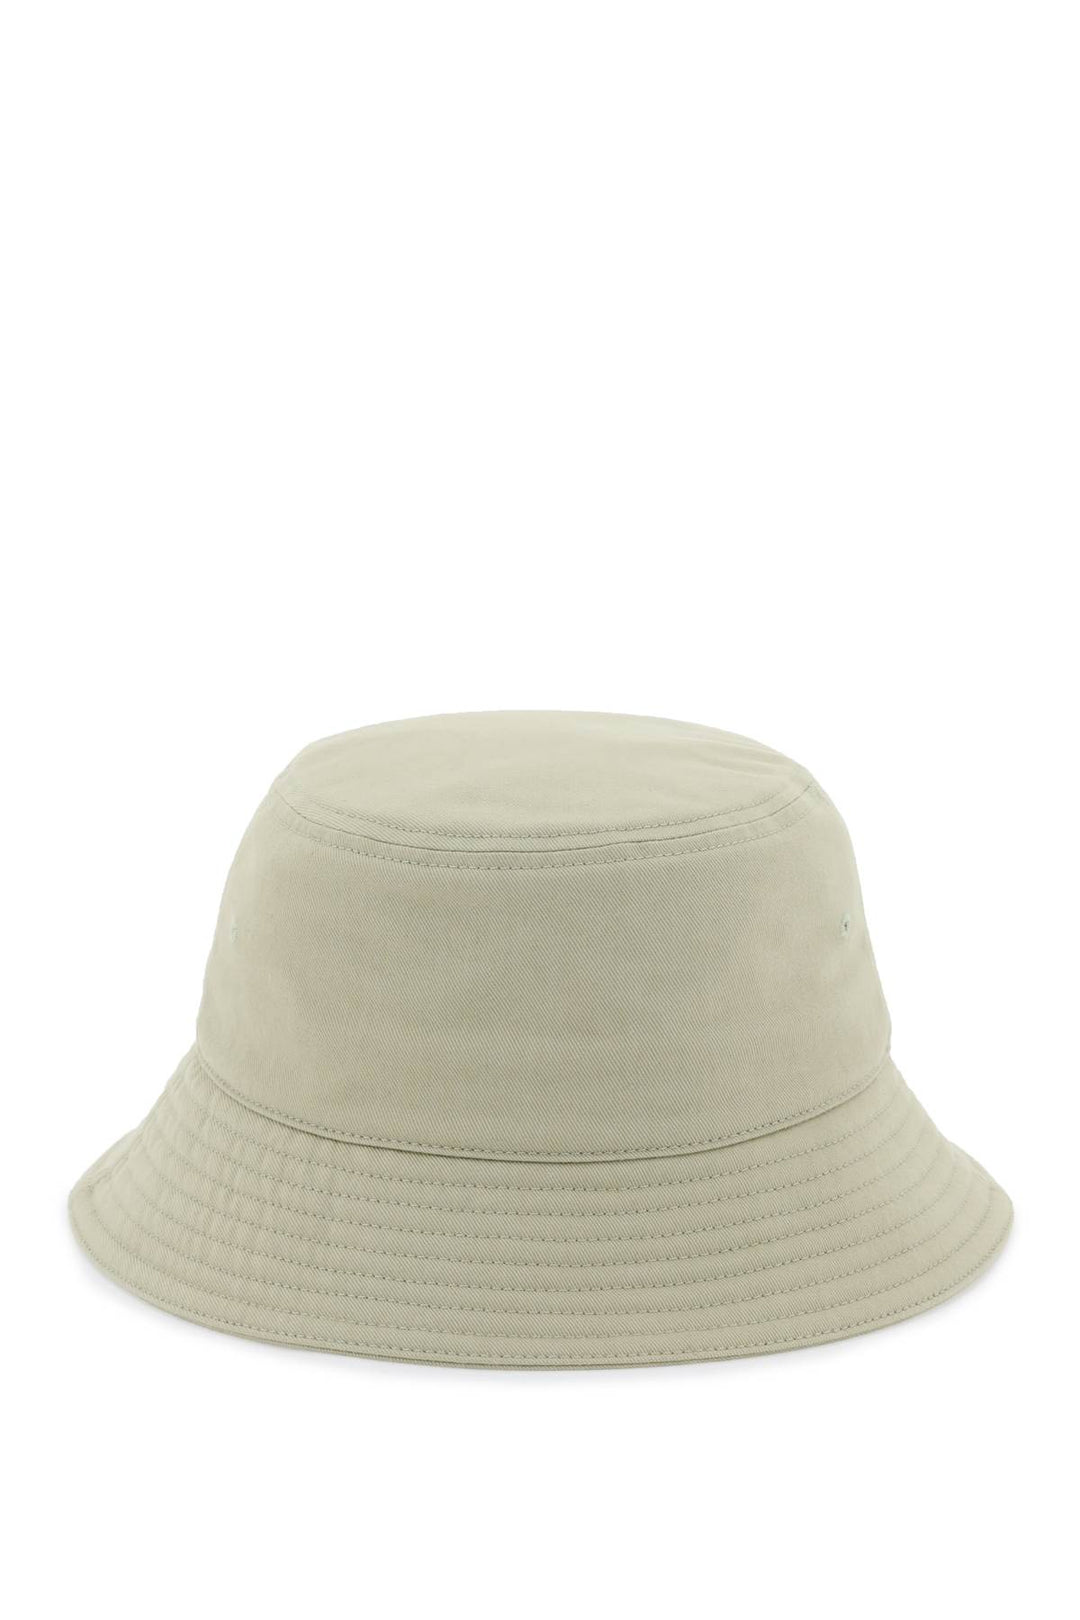 Burberry Ekd Bucket Hat   Neutro